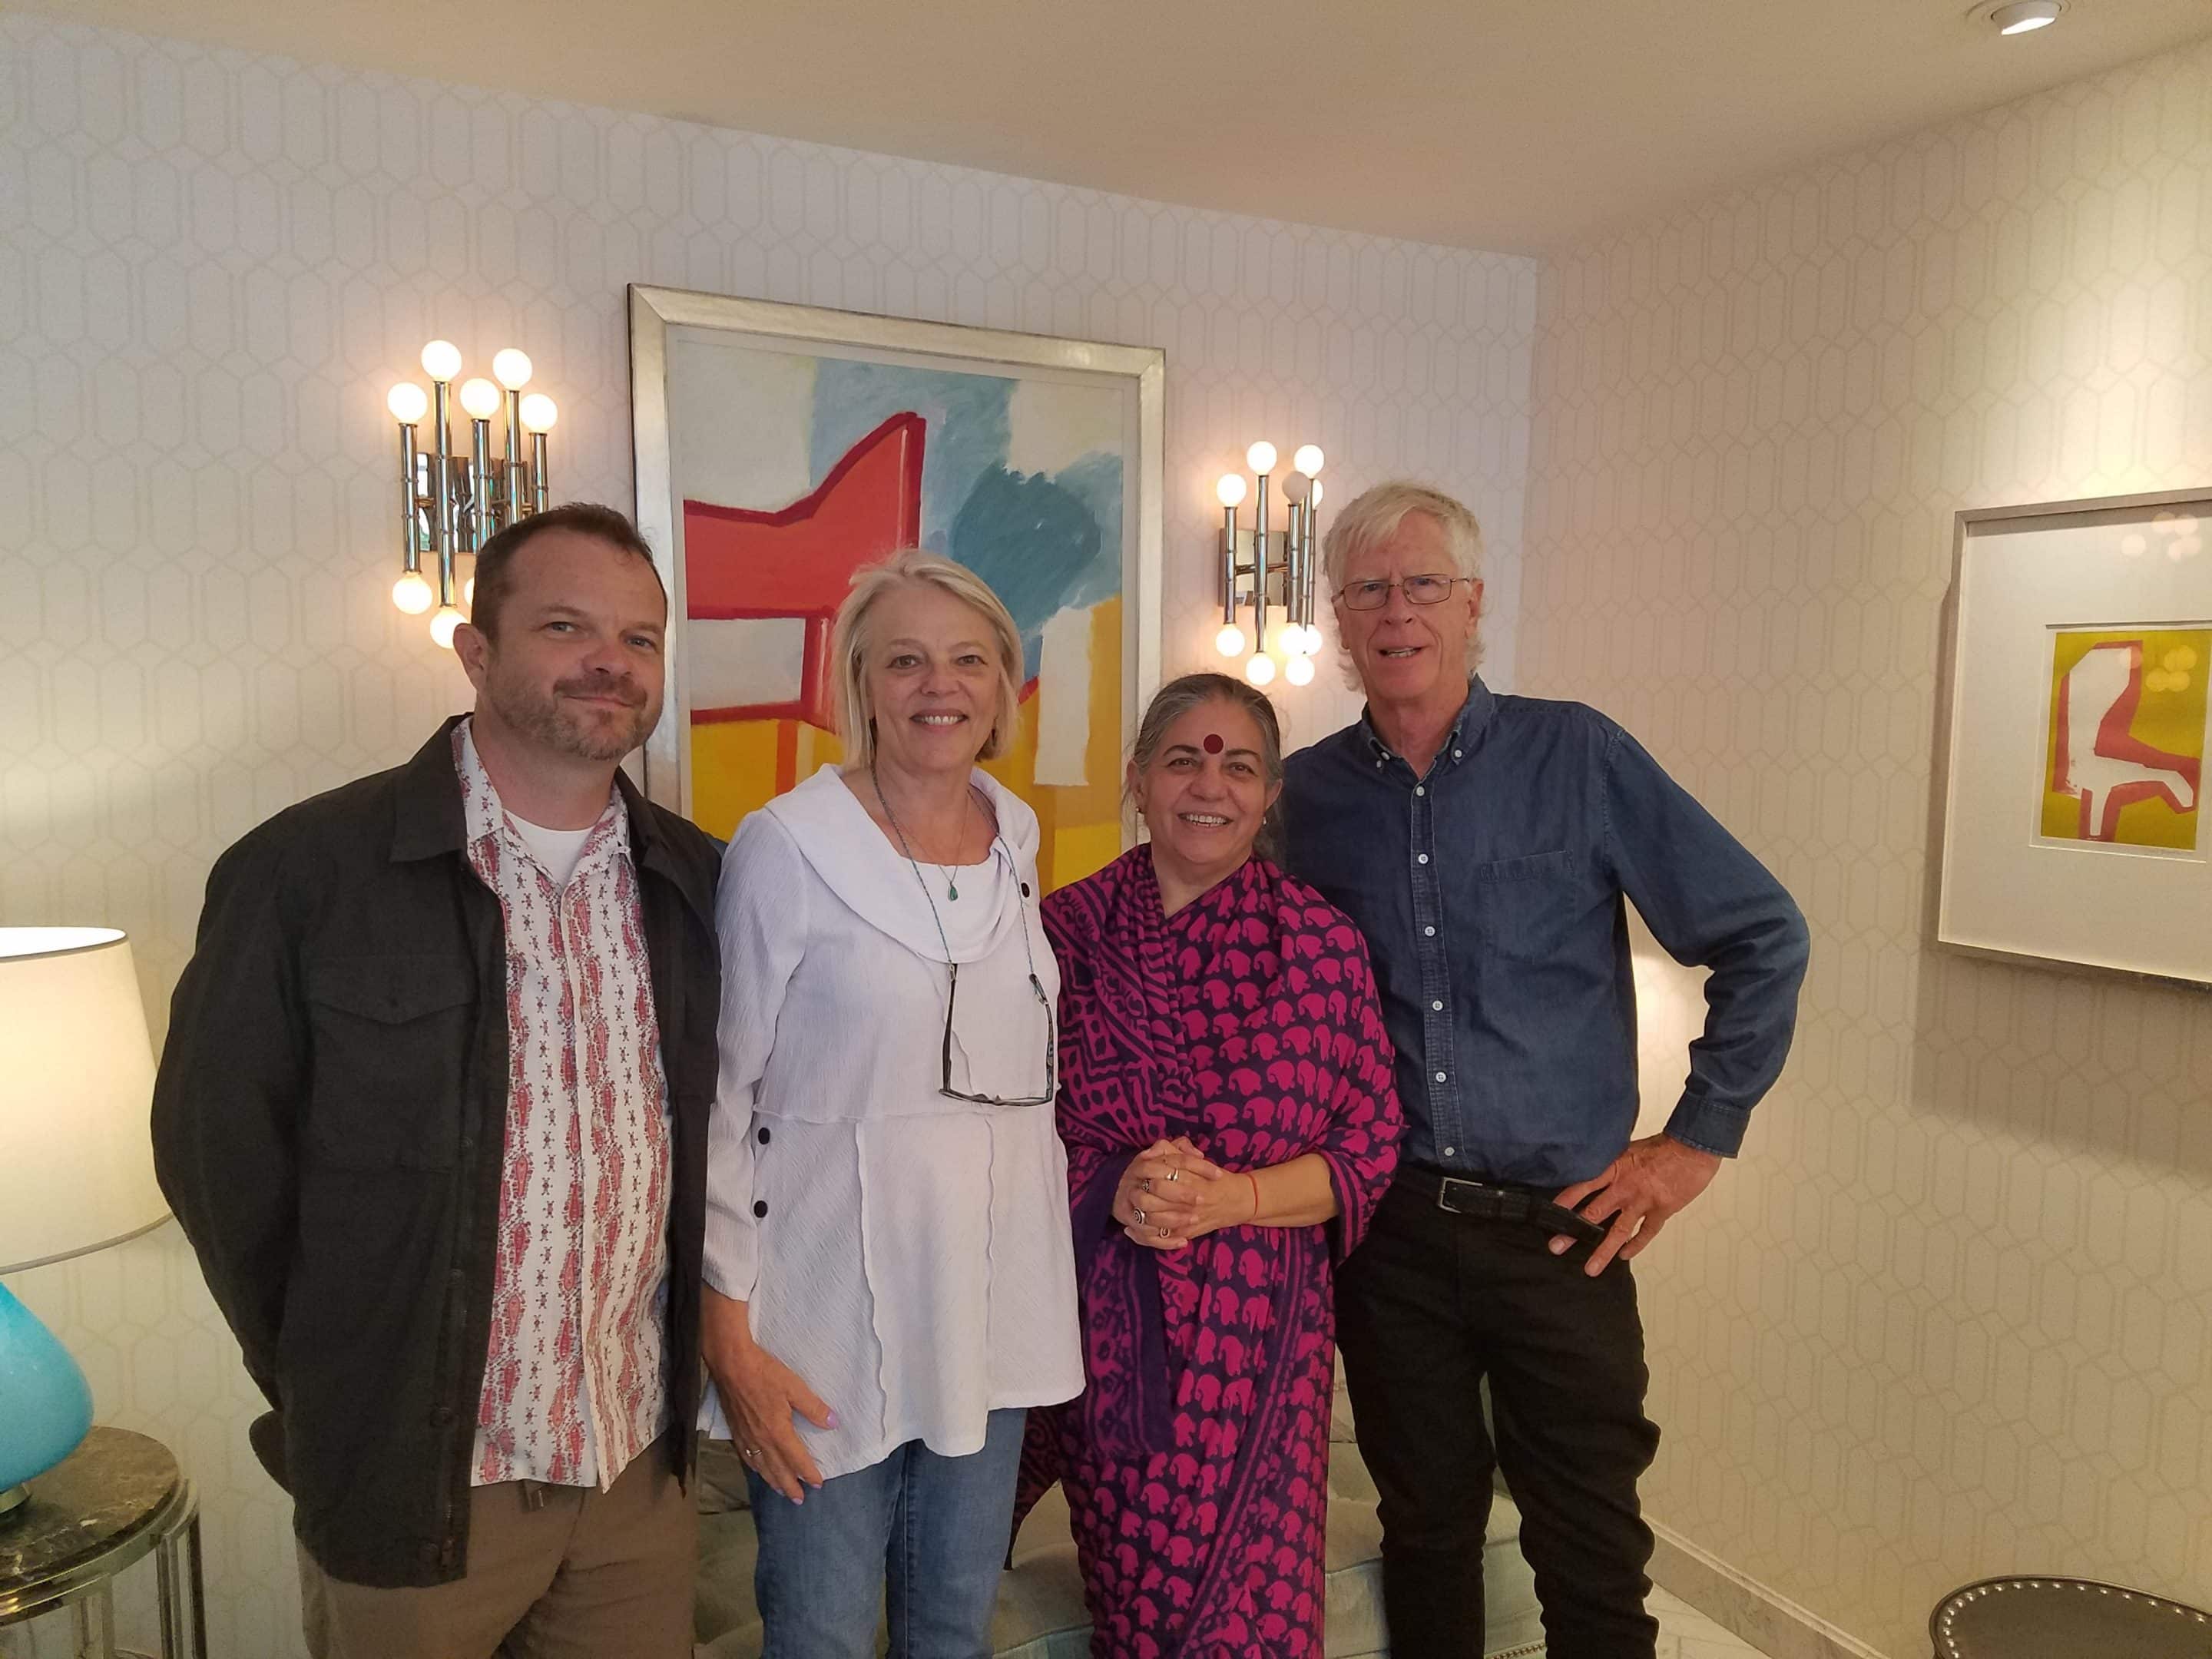 Doug Reil, Vandana Shiva, Deborah Snyder, and Michael Gosney (far right), San Francisco 2019